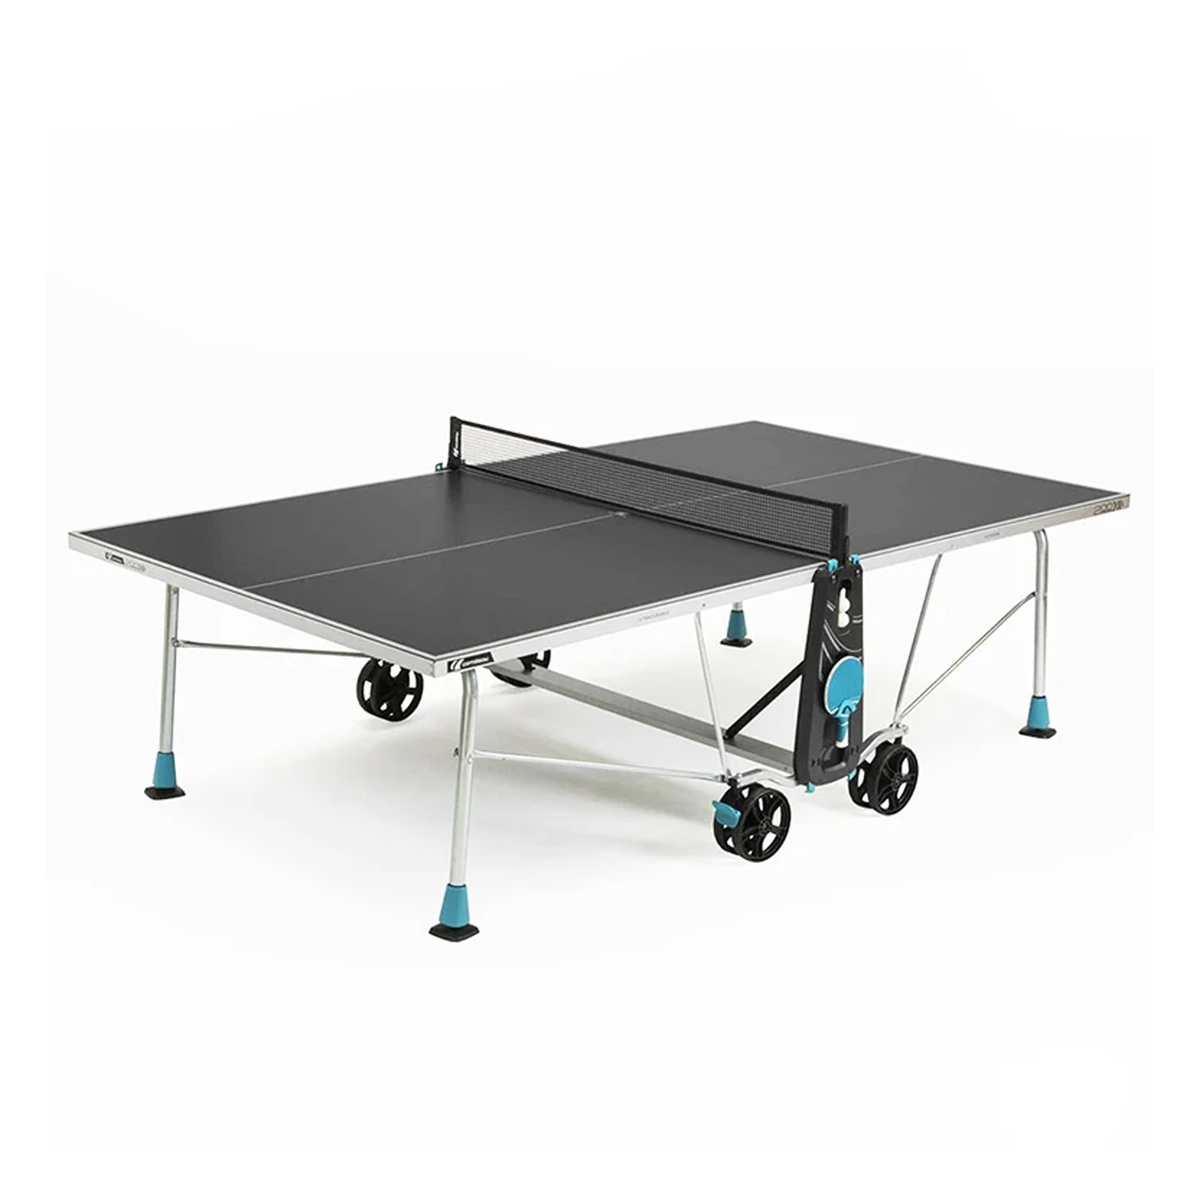 Cornilleau 200 X Sport Outdoor Table Tennis Table, Grey, 53017